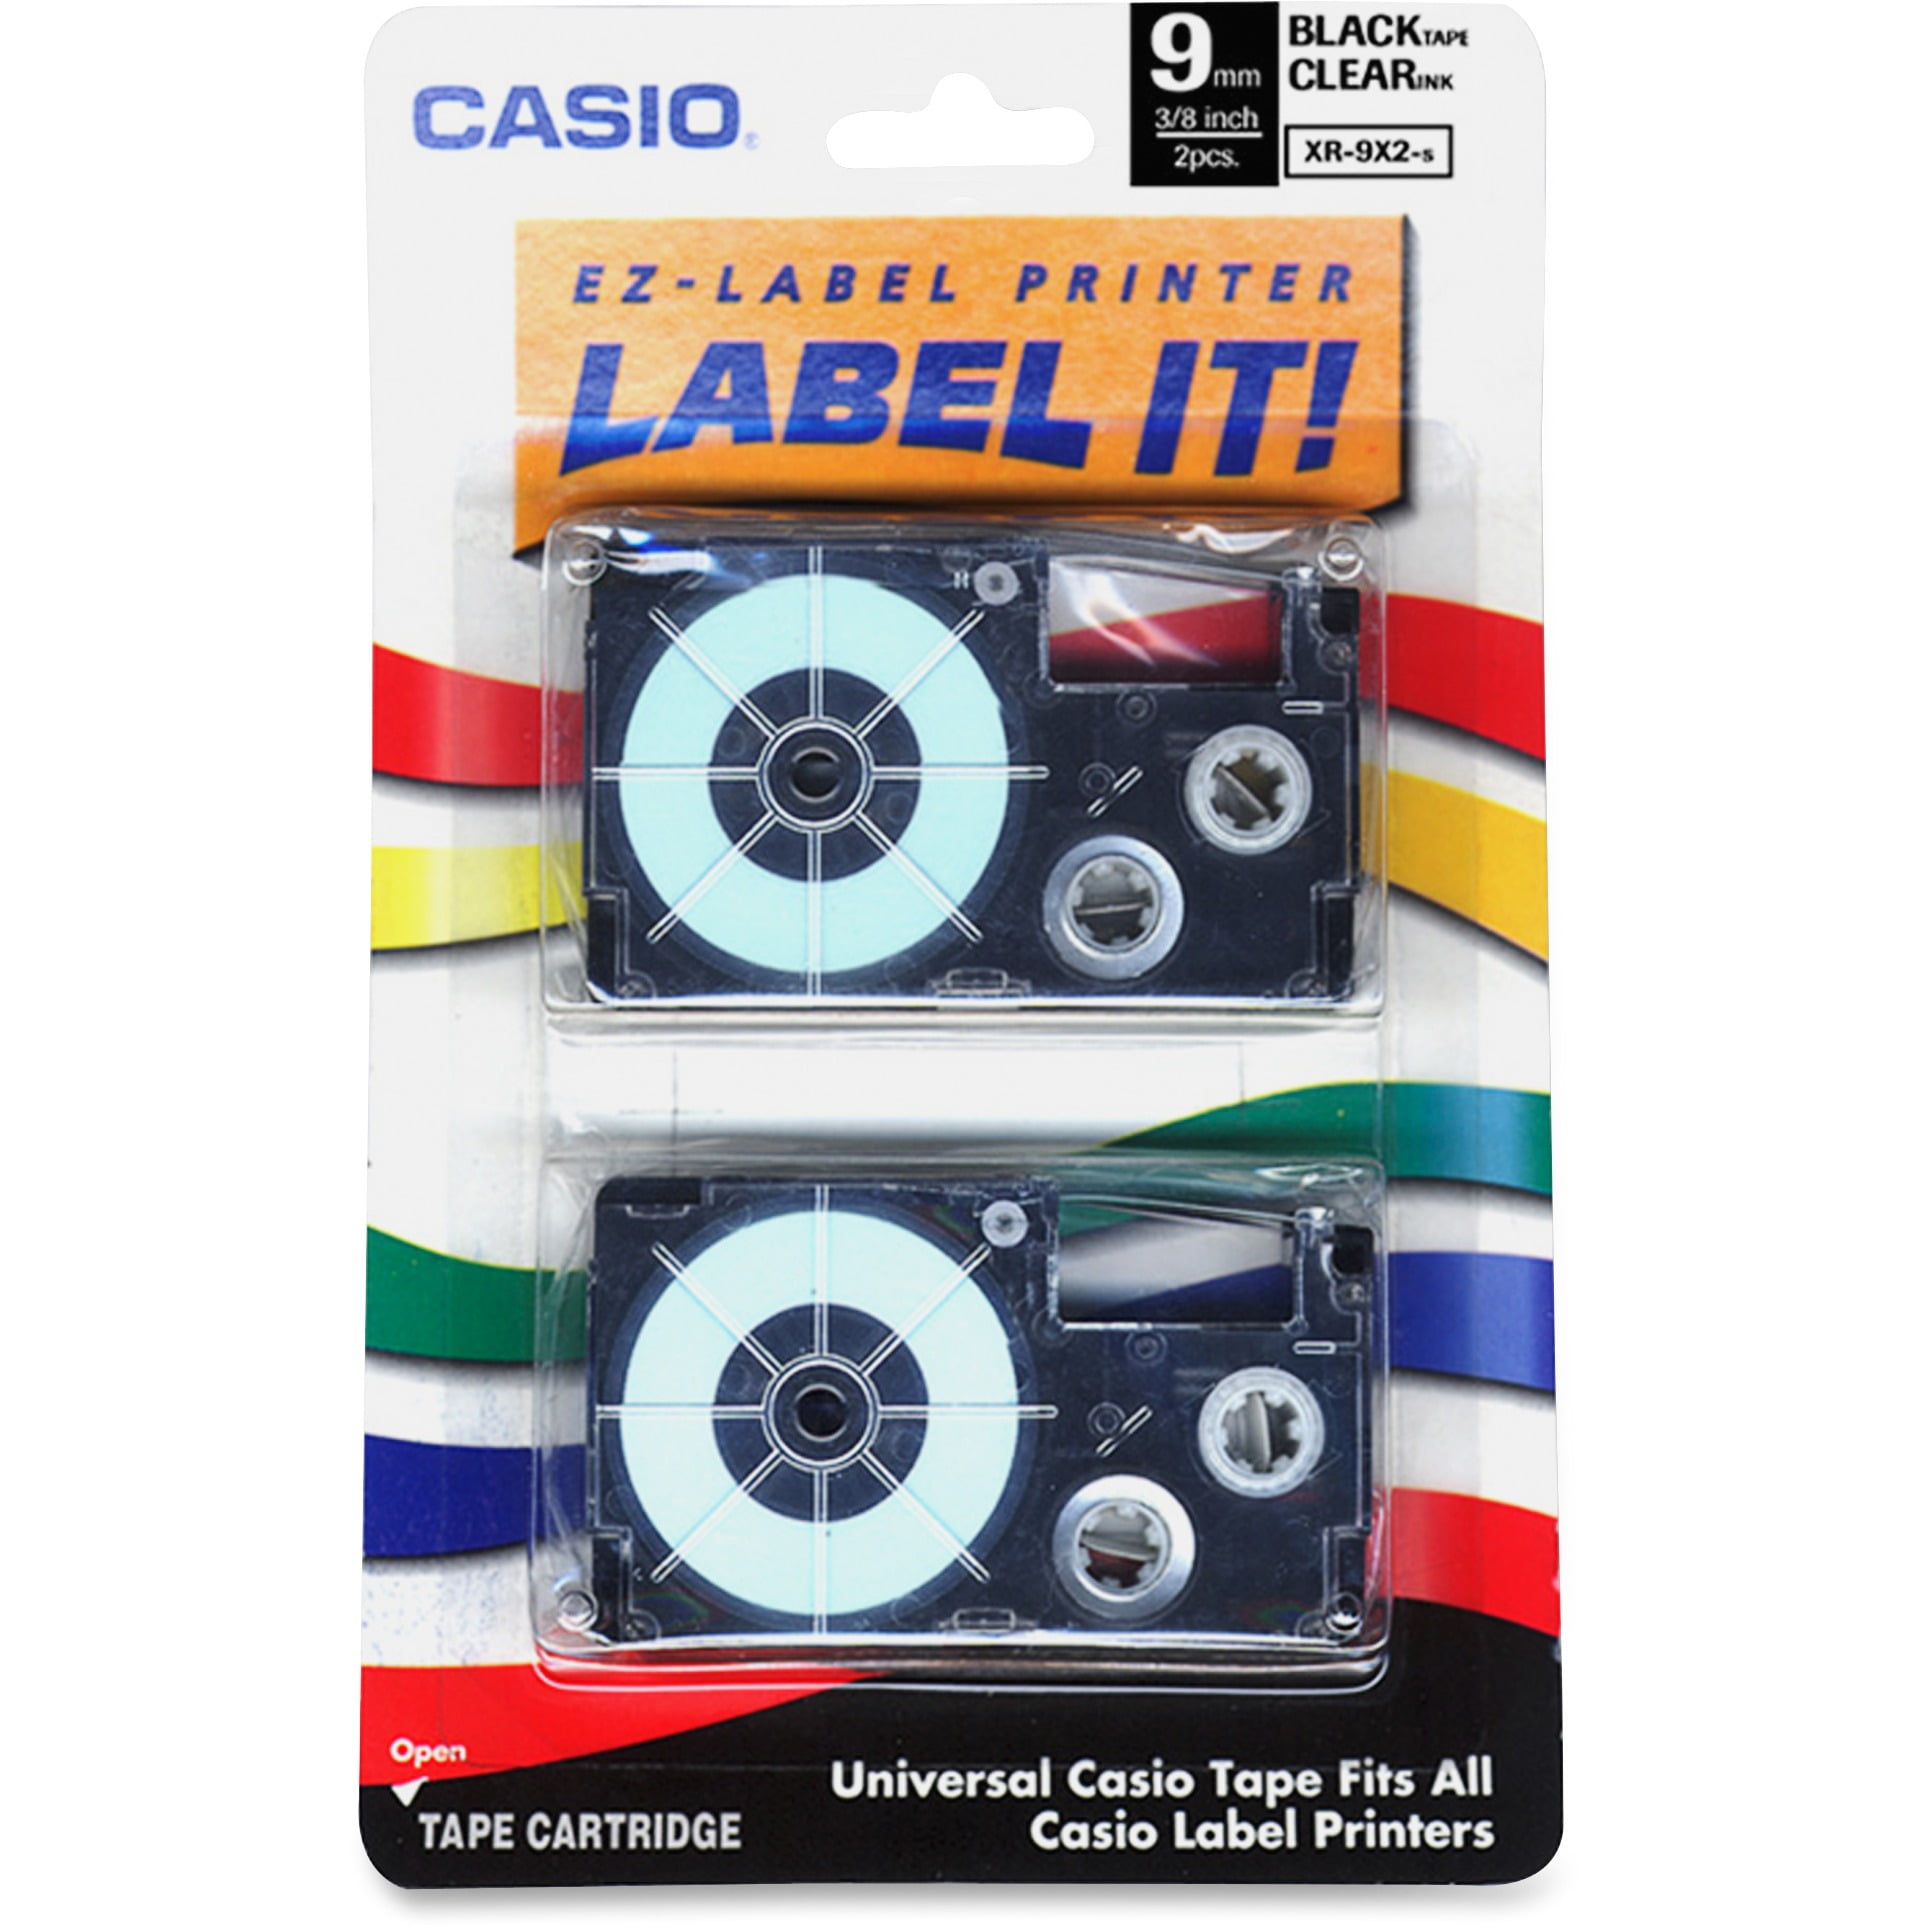 Casio Xr9x2s 9mm Black/clear Label Tape 2pk for sale online